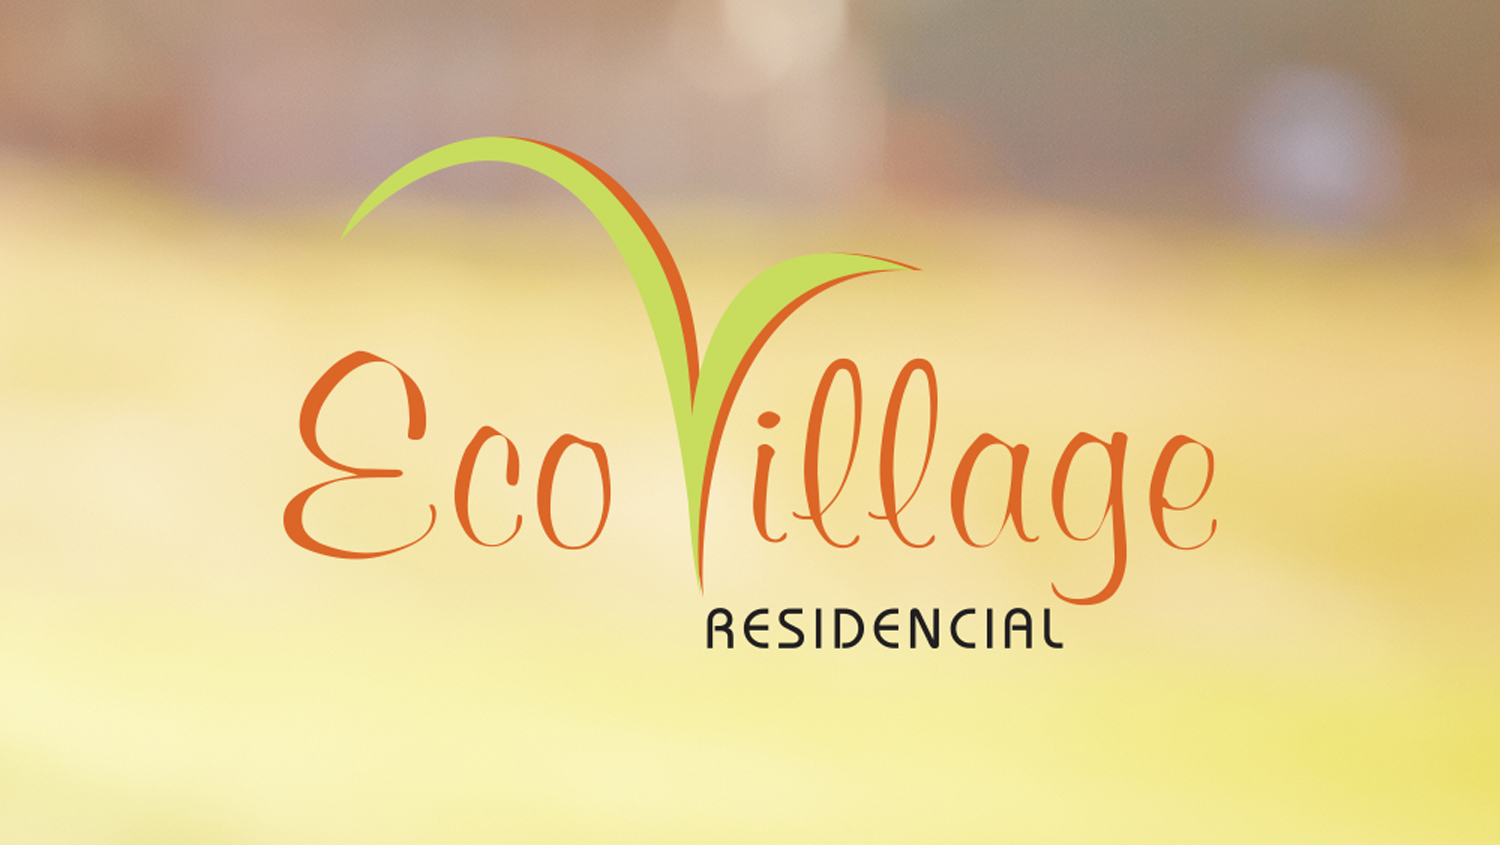 Alexakis Propaganda Rio Preto – Logotipo Eco Village - Alexakis